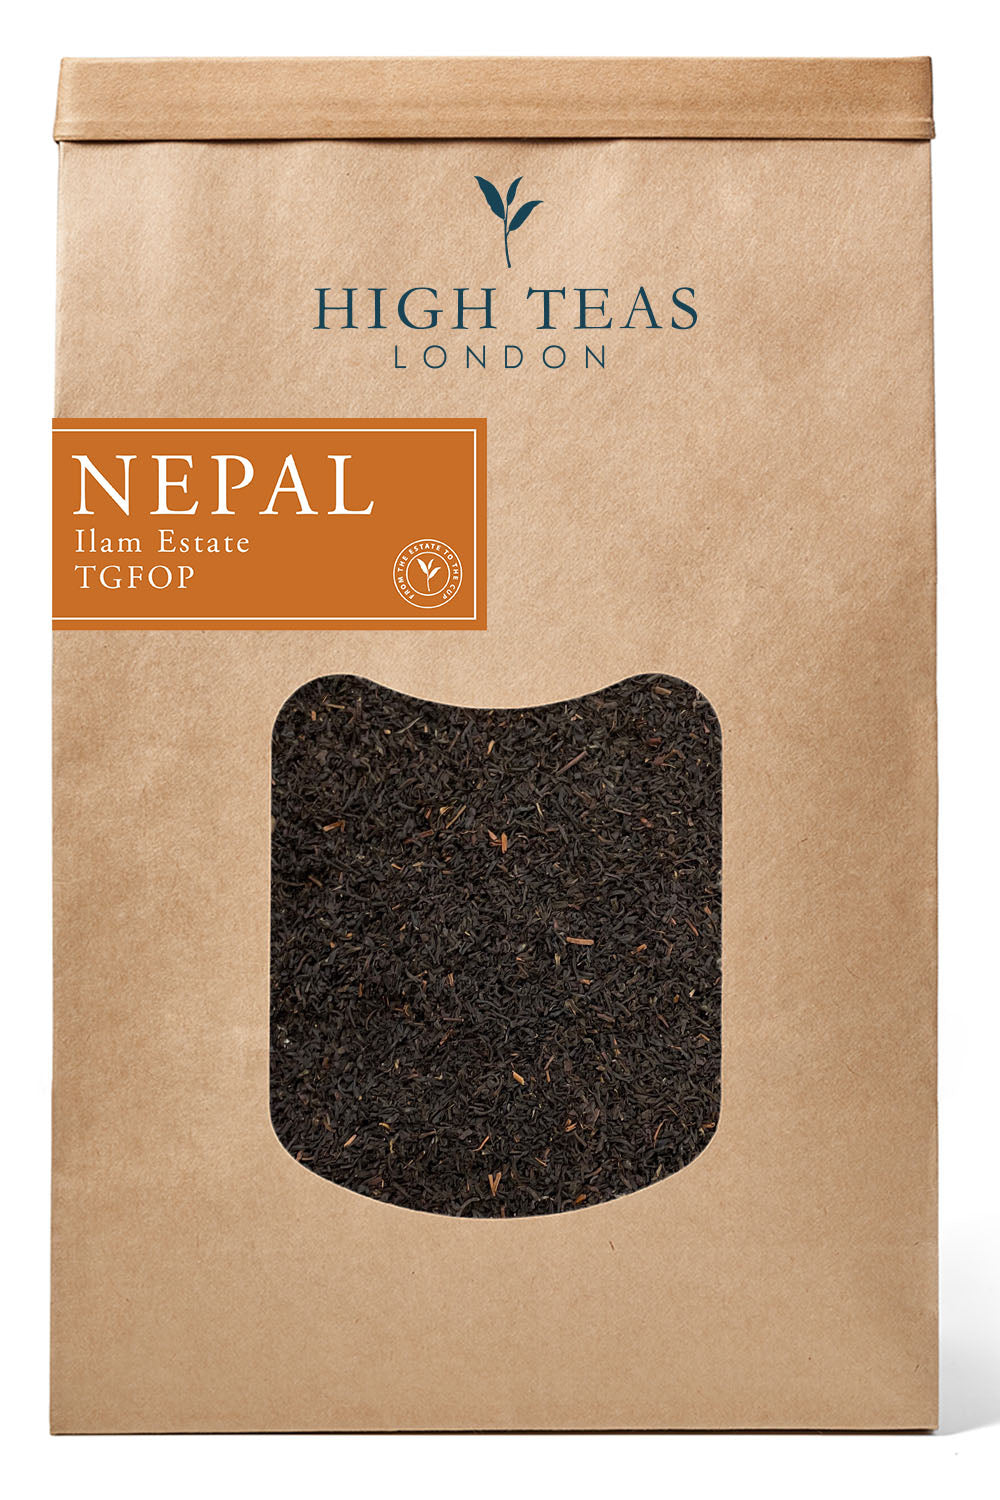 Nepal - Ilam Estate 2nd Flush TGFOP-500g-Loose Leaf Tea-High Teas